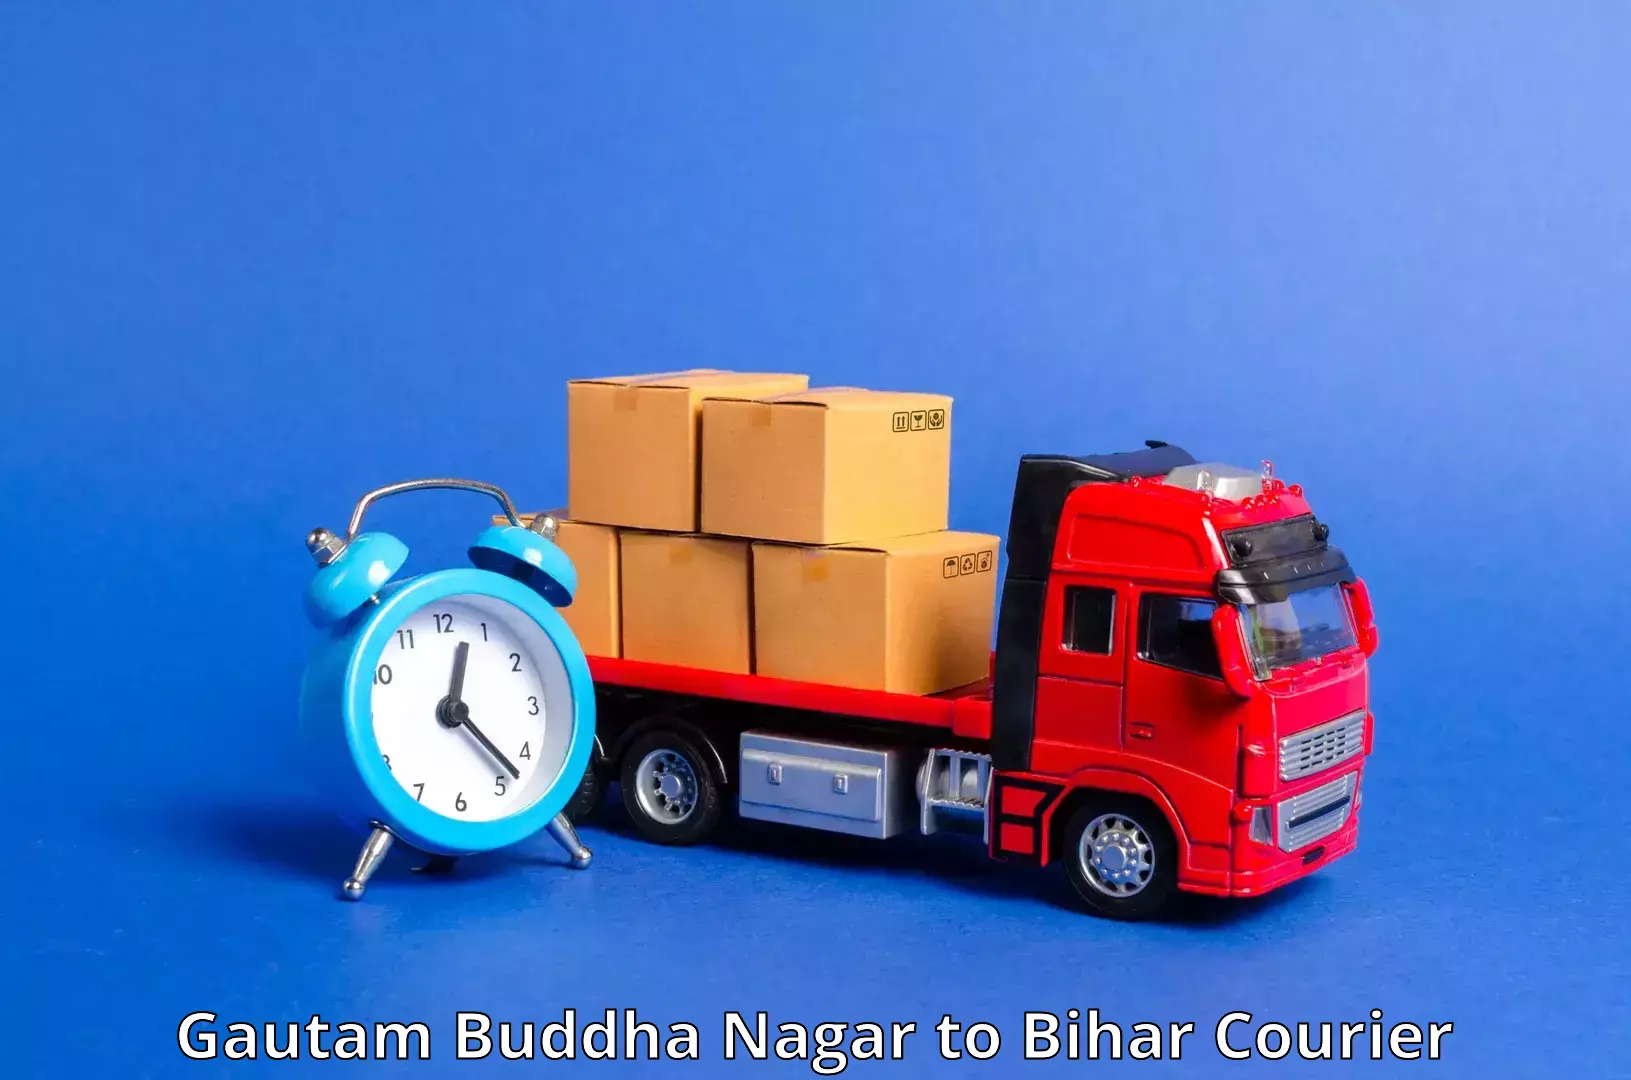 Express delivery capabilities Gautam Buddha Nagar to Bihar